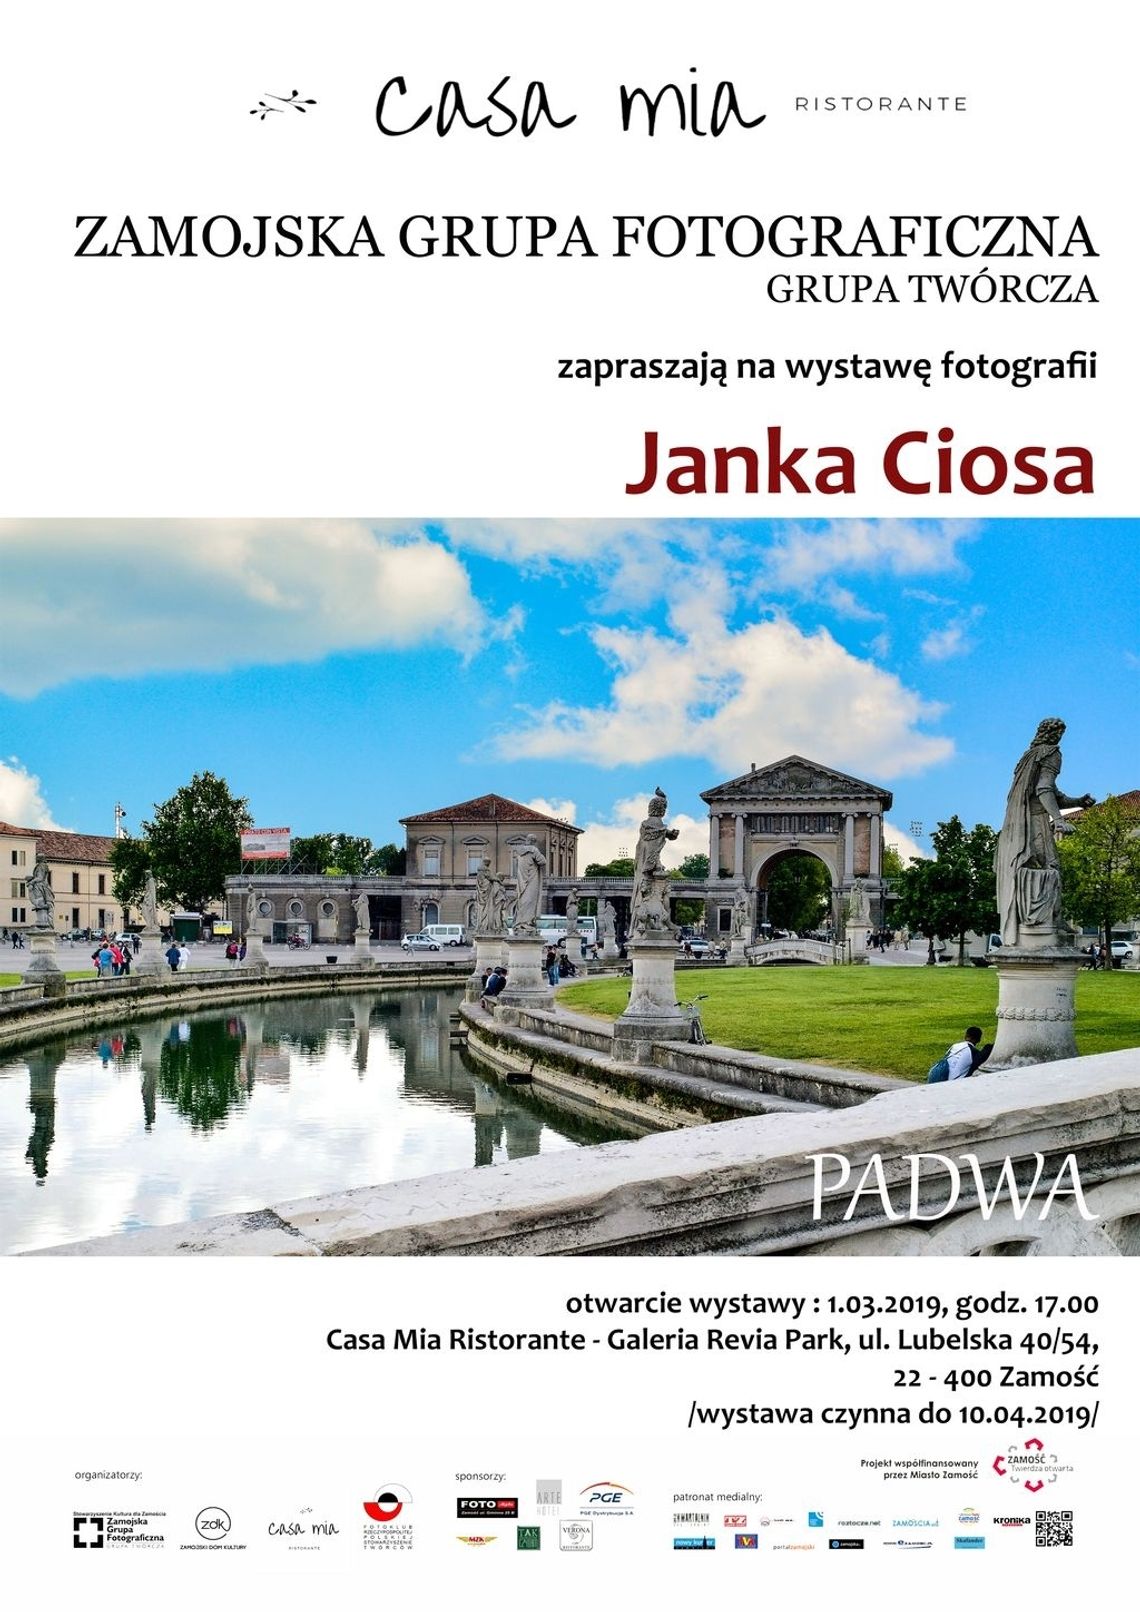 "PADWA" - wystawa fotografii Janka Ciosa ZGF GT